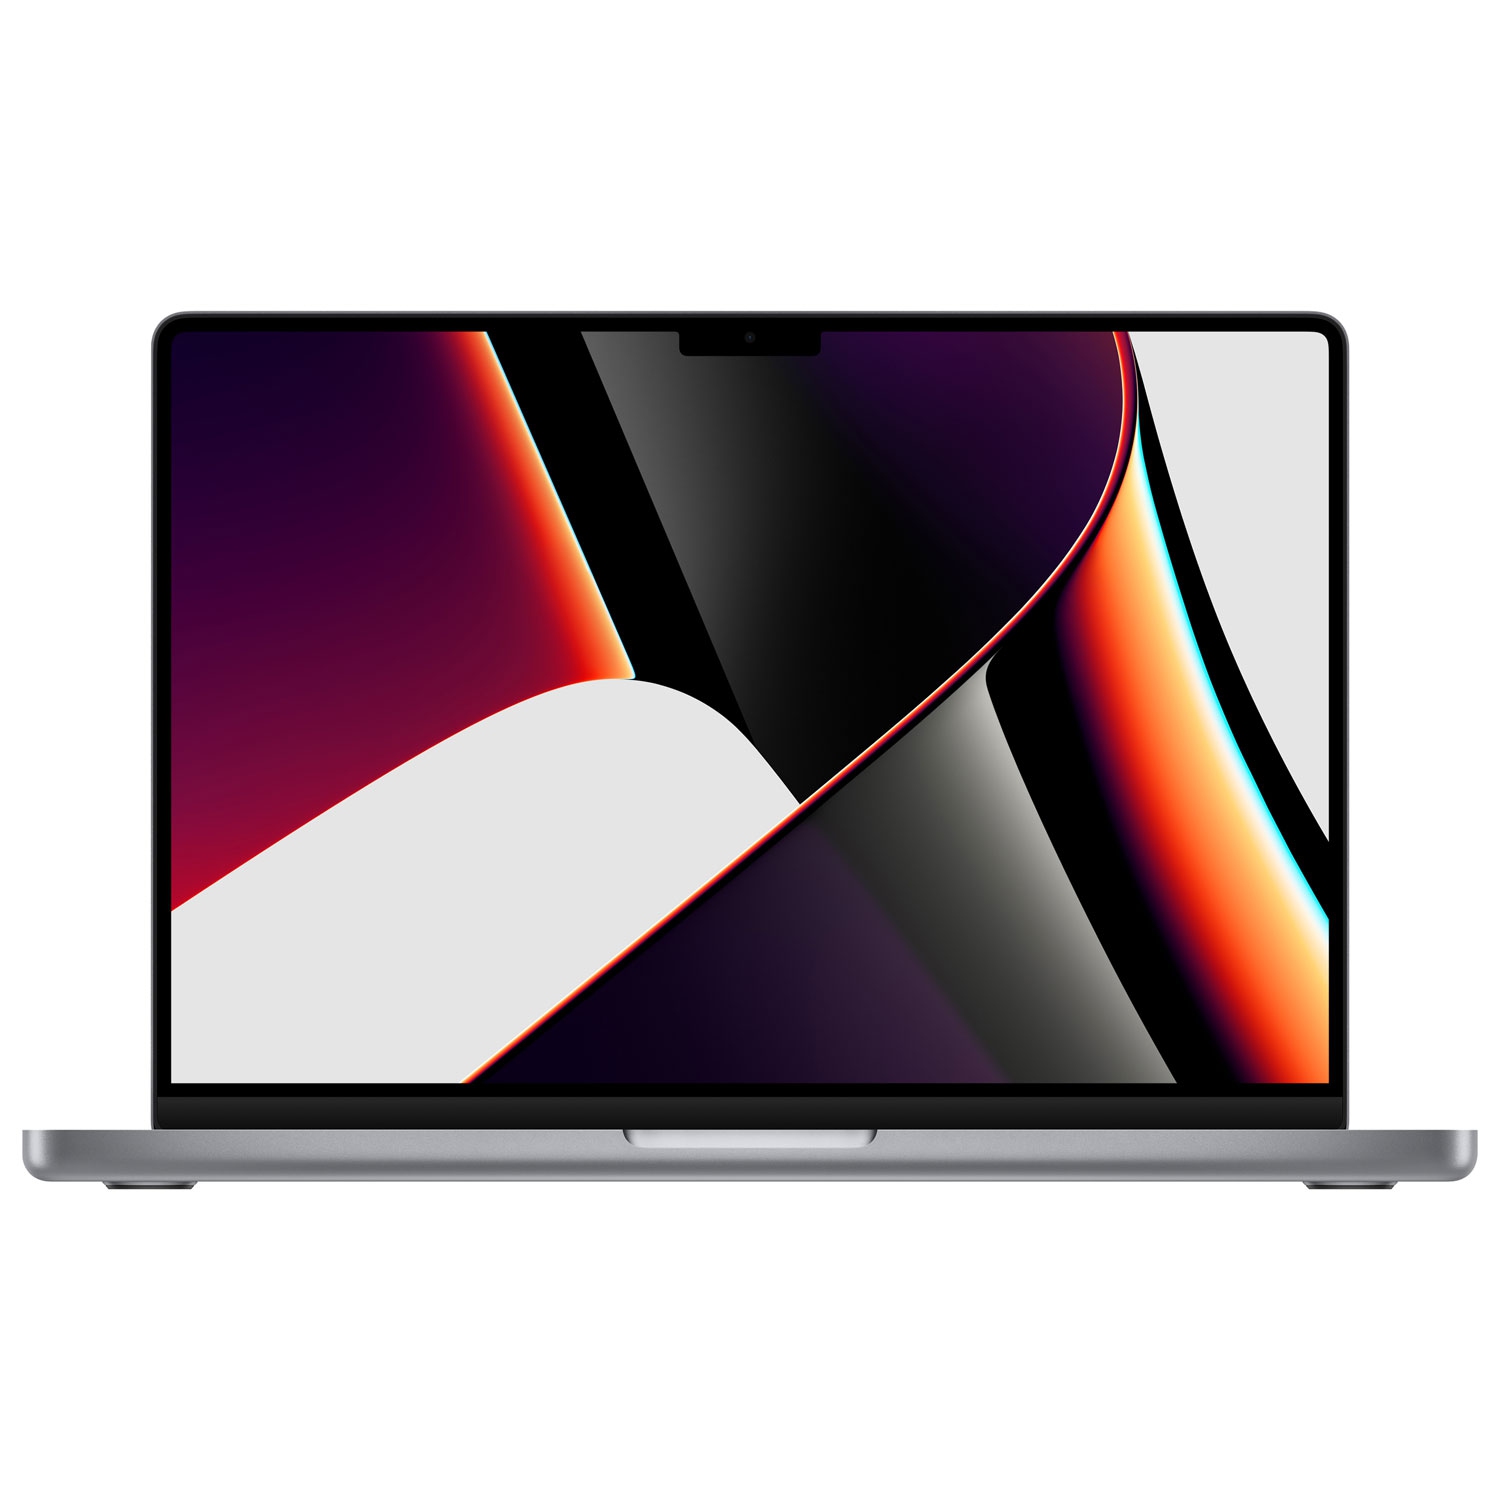 Apple MacBook Pro 14" (2021) - Space Grey (Apple M1 Pro Chip / 512GB SSD / 16GB RAM) - Apple Care+ Expires AUGUST 2025 - English - Open Box